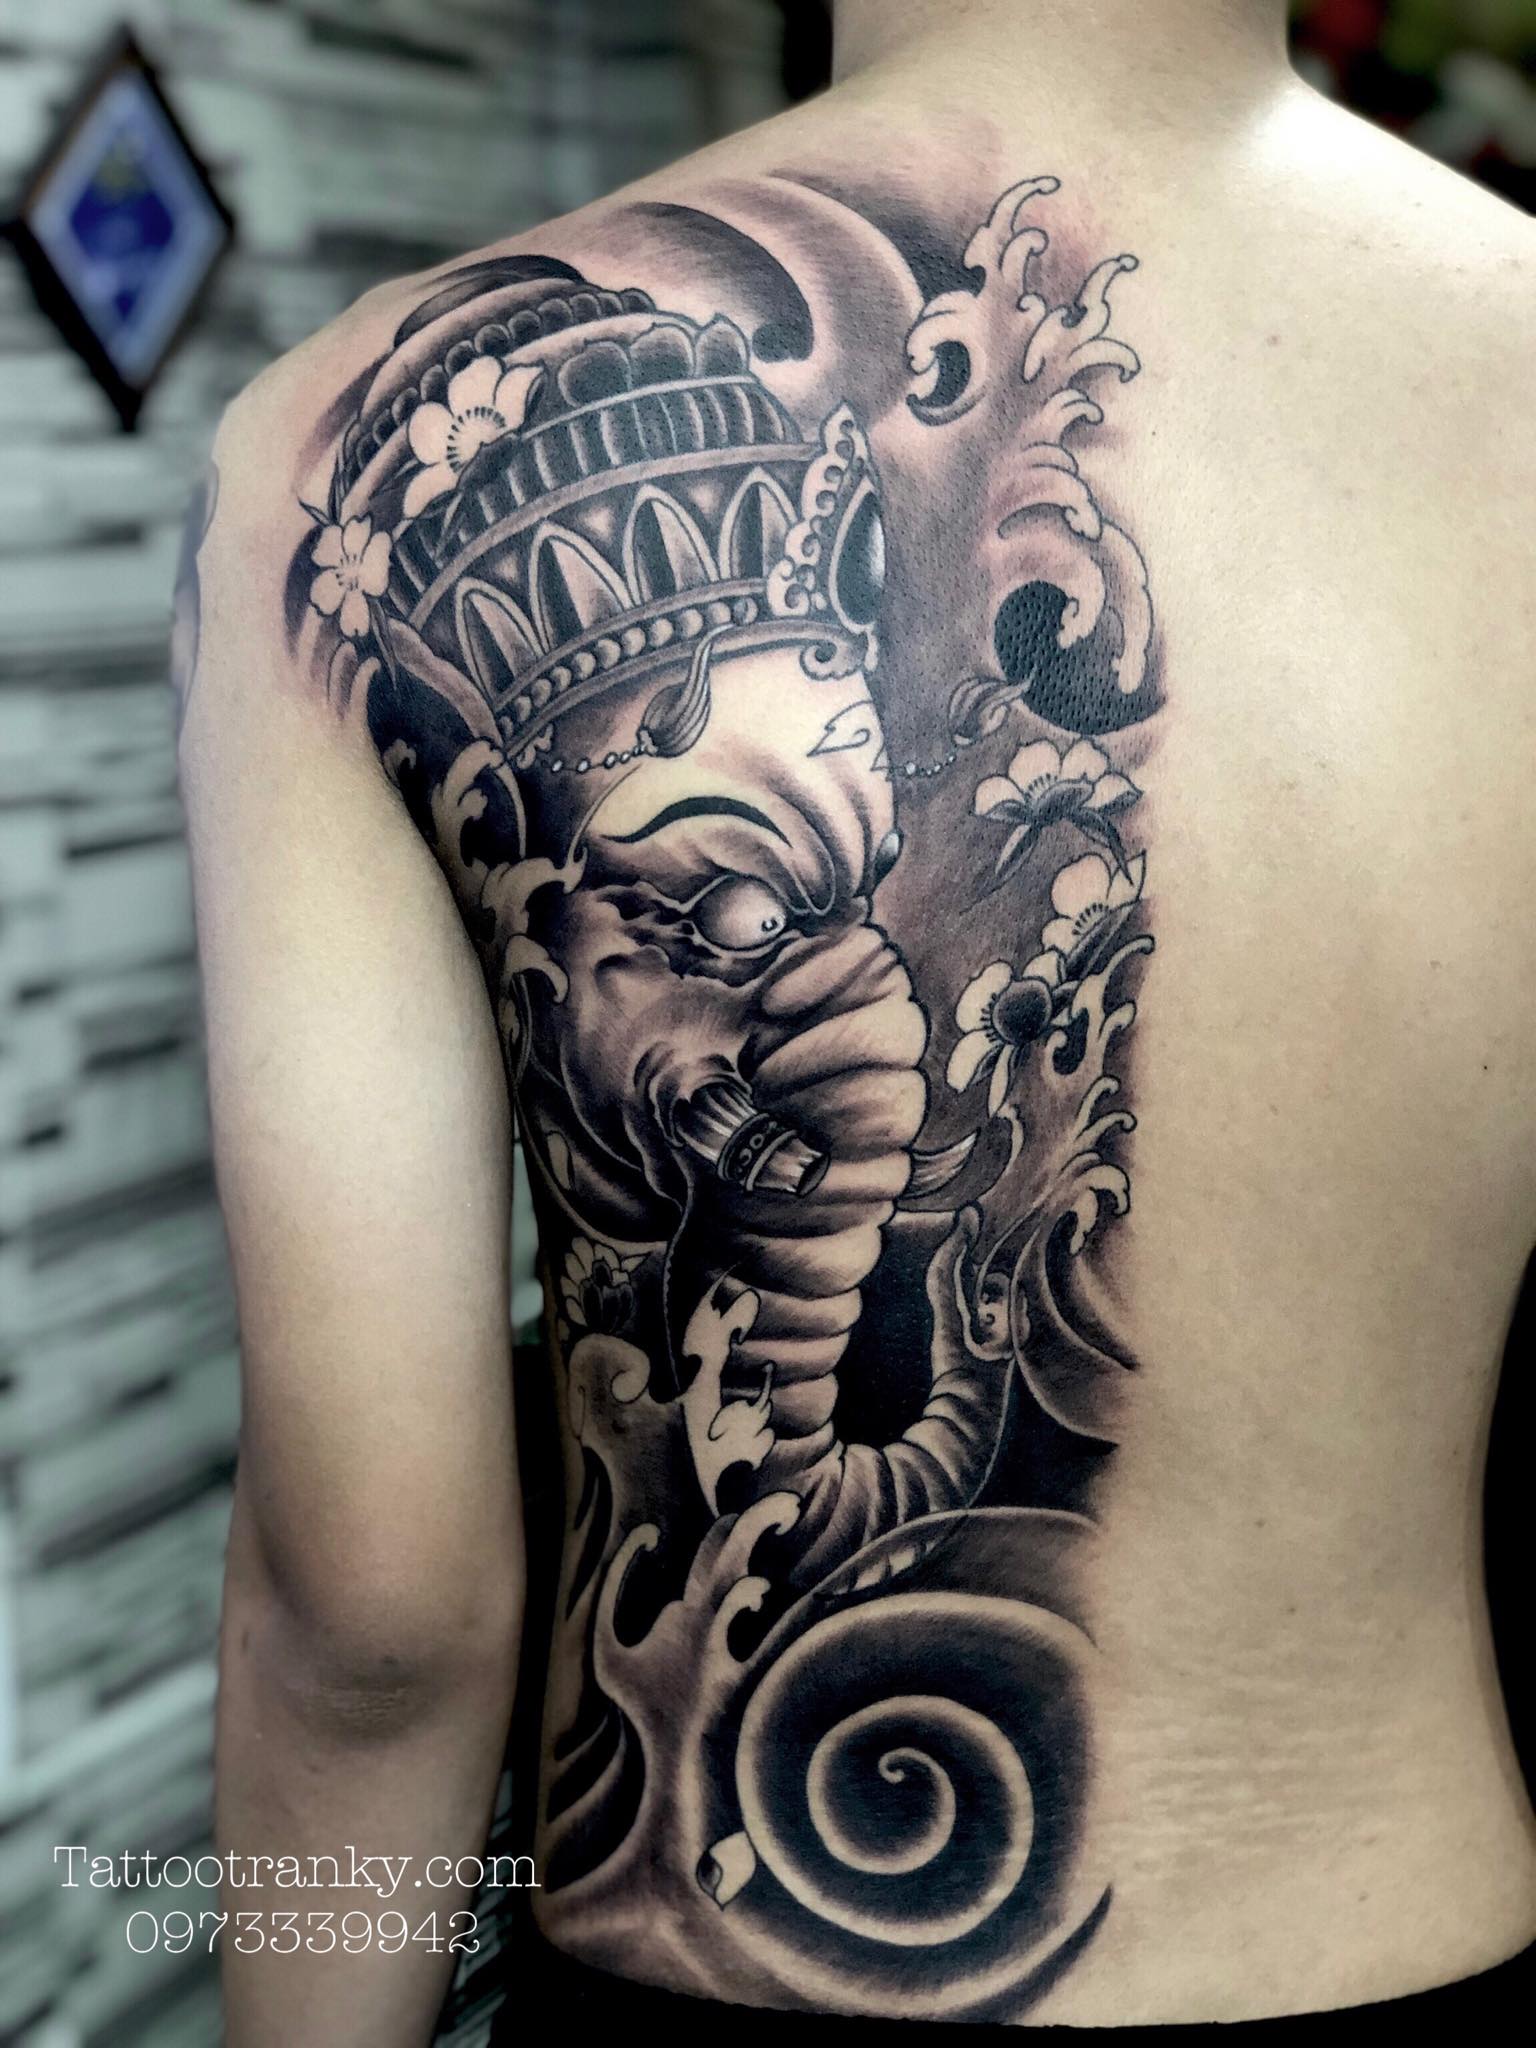 Tattoo voi thần  Thế Giới Tattoo  Xăm Hình Nghệ Thuật  Facebook